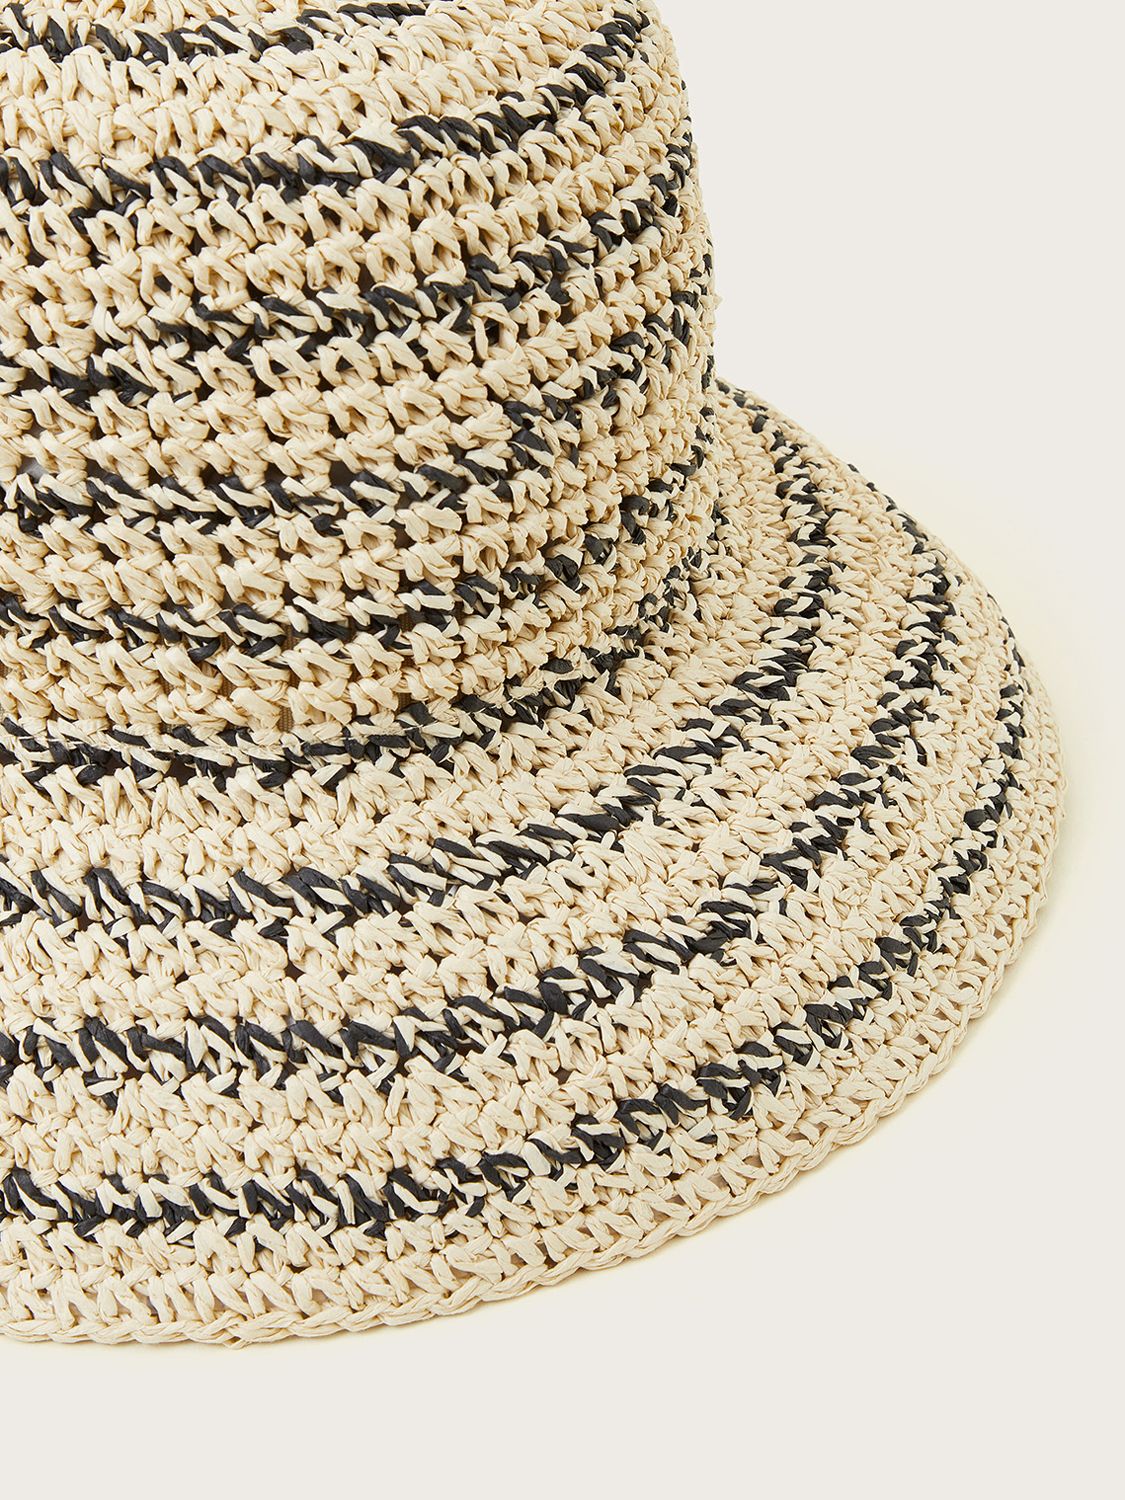 Monsoon Crochet Summer Hat, Natural/Black, One Size